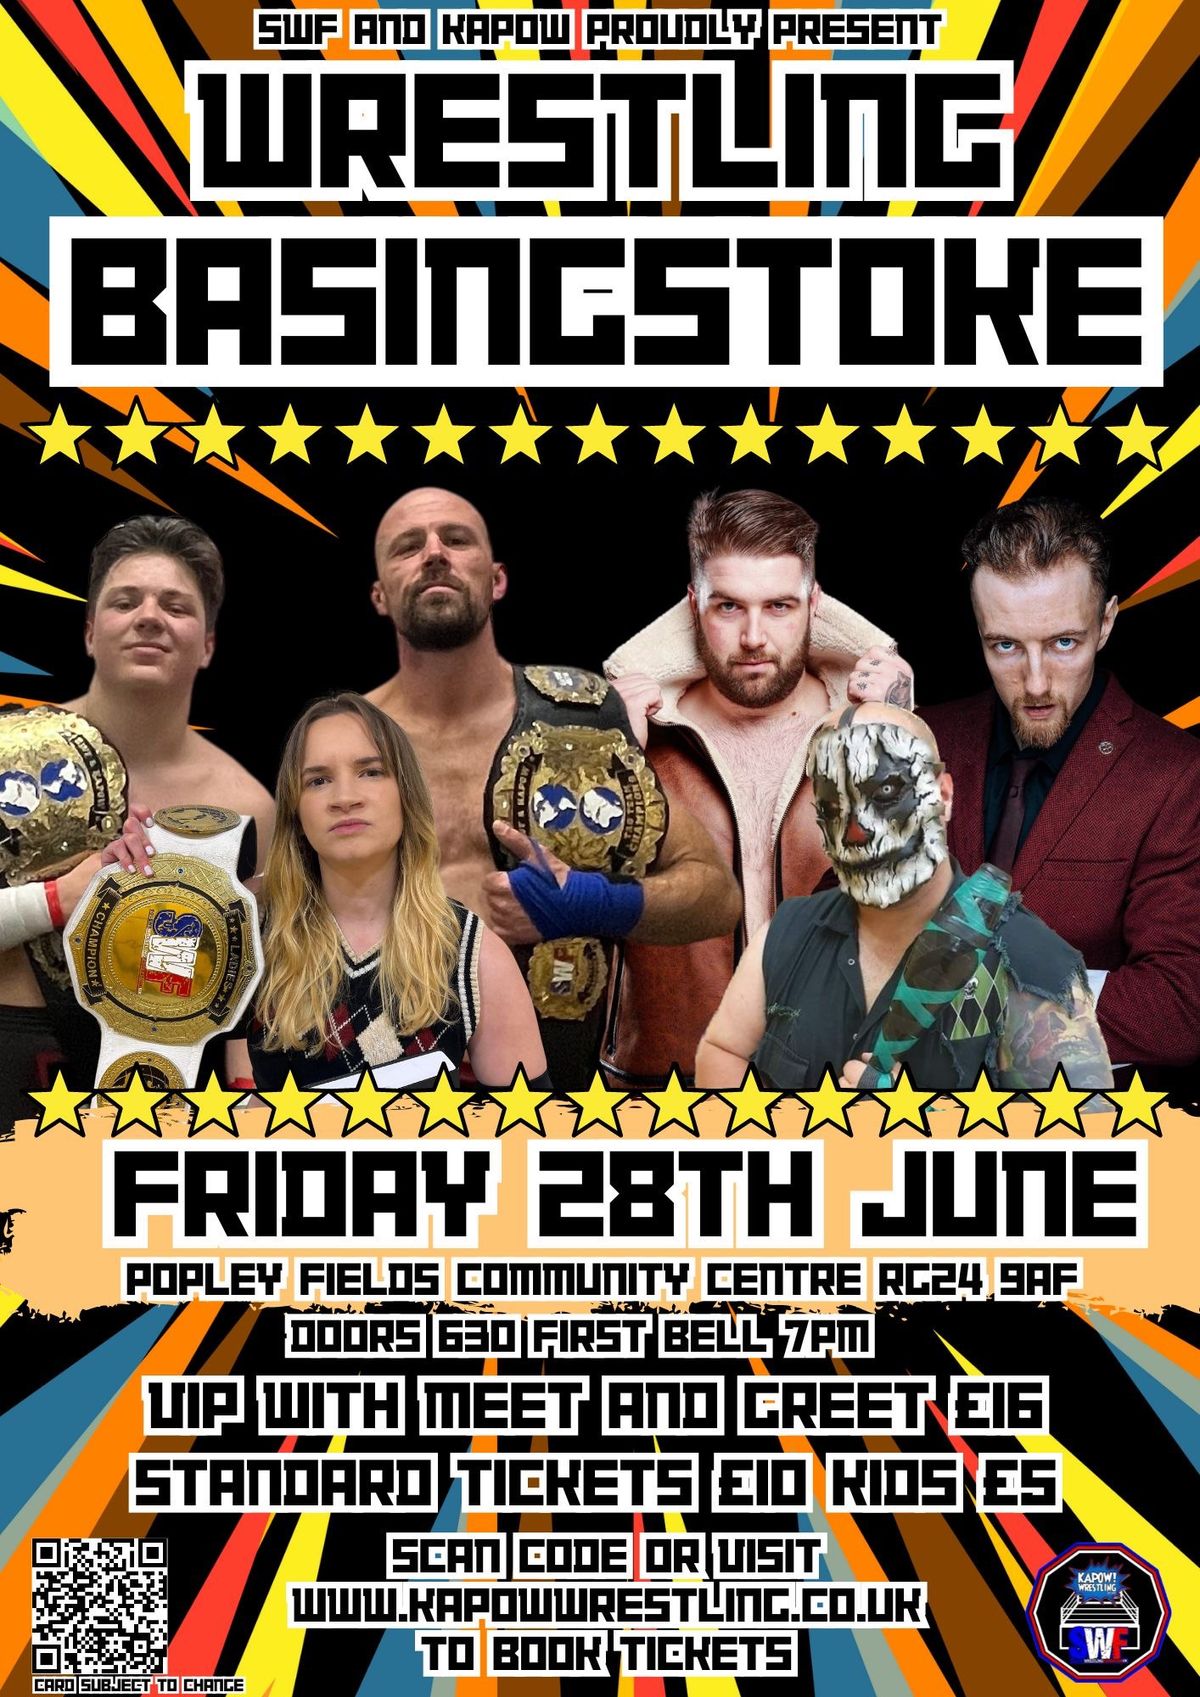 Live Wrestling back in Basingstoke